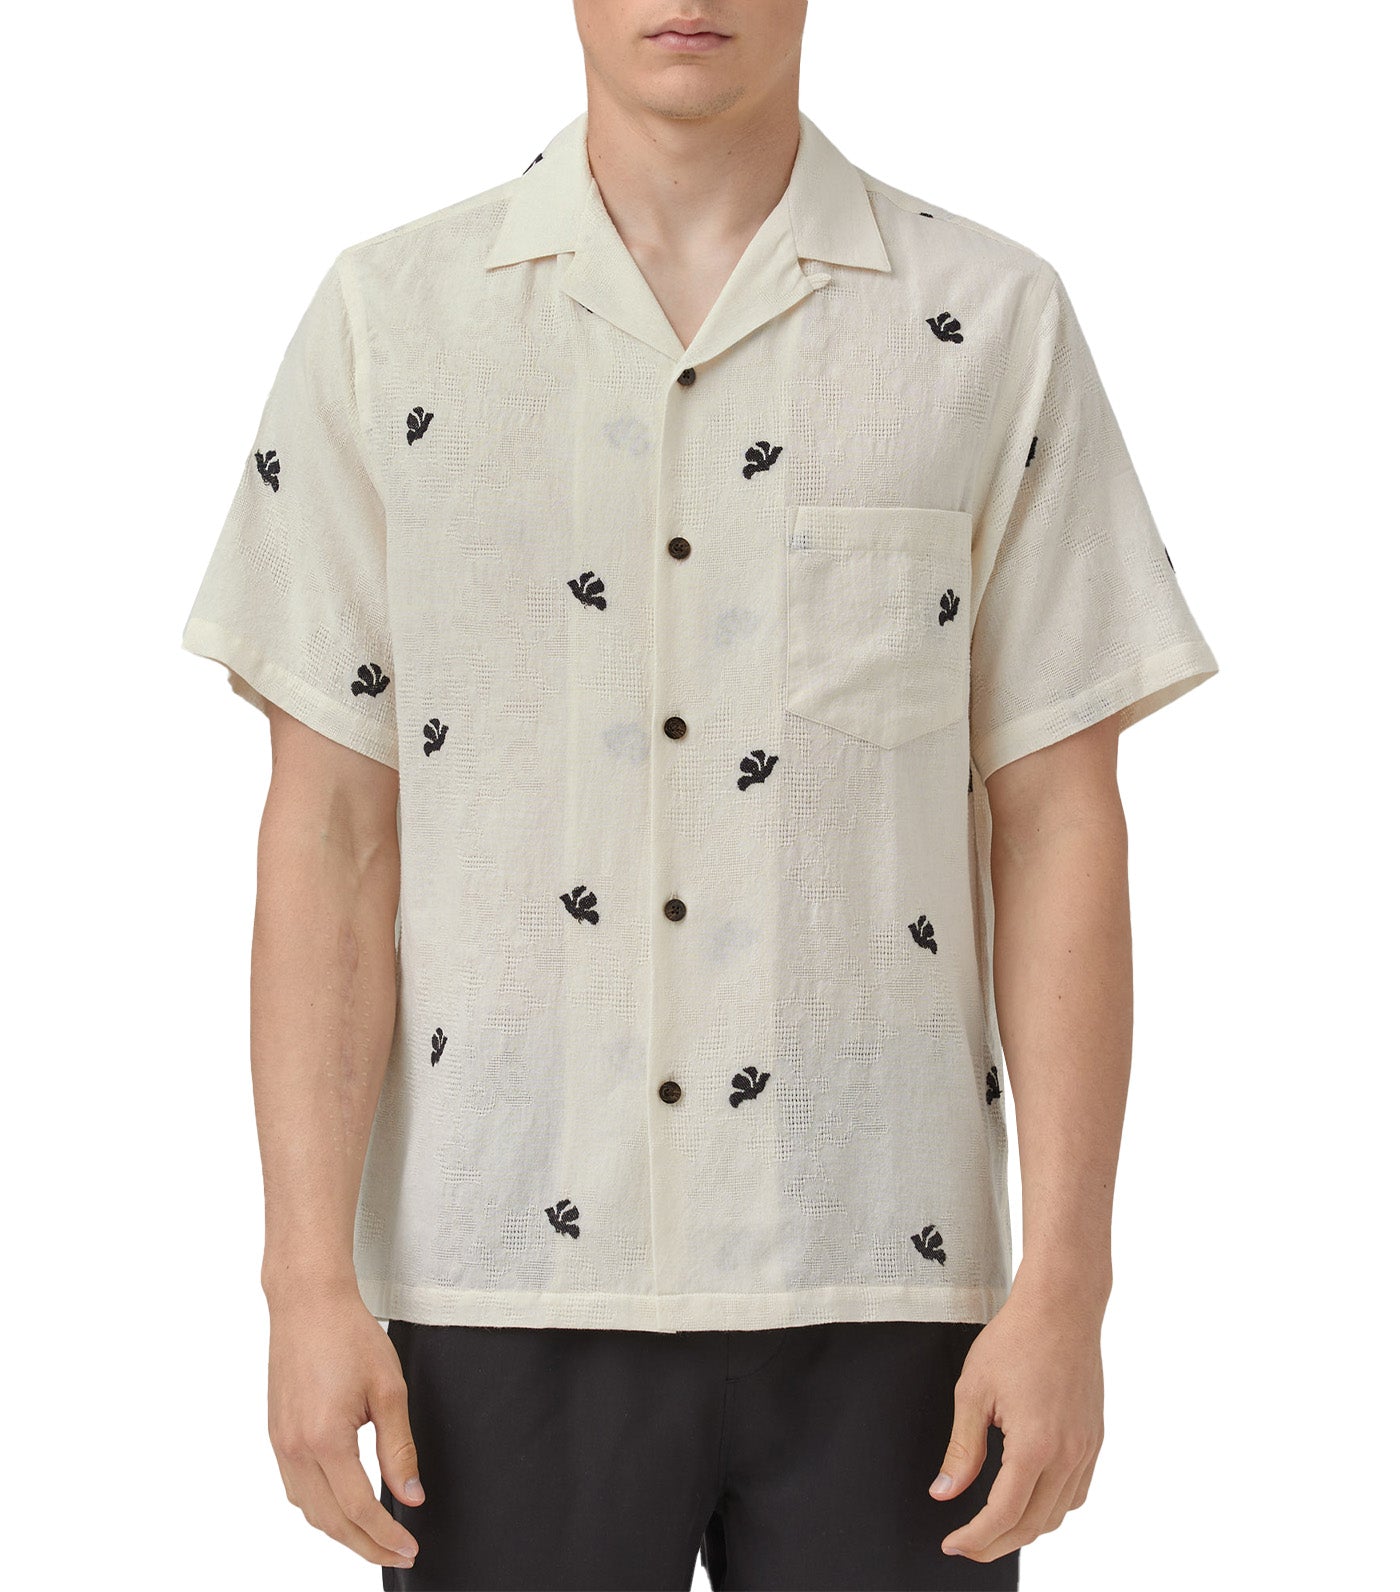 Philly Embroidered Short Sleeved Shirt Ecru/Black